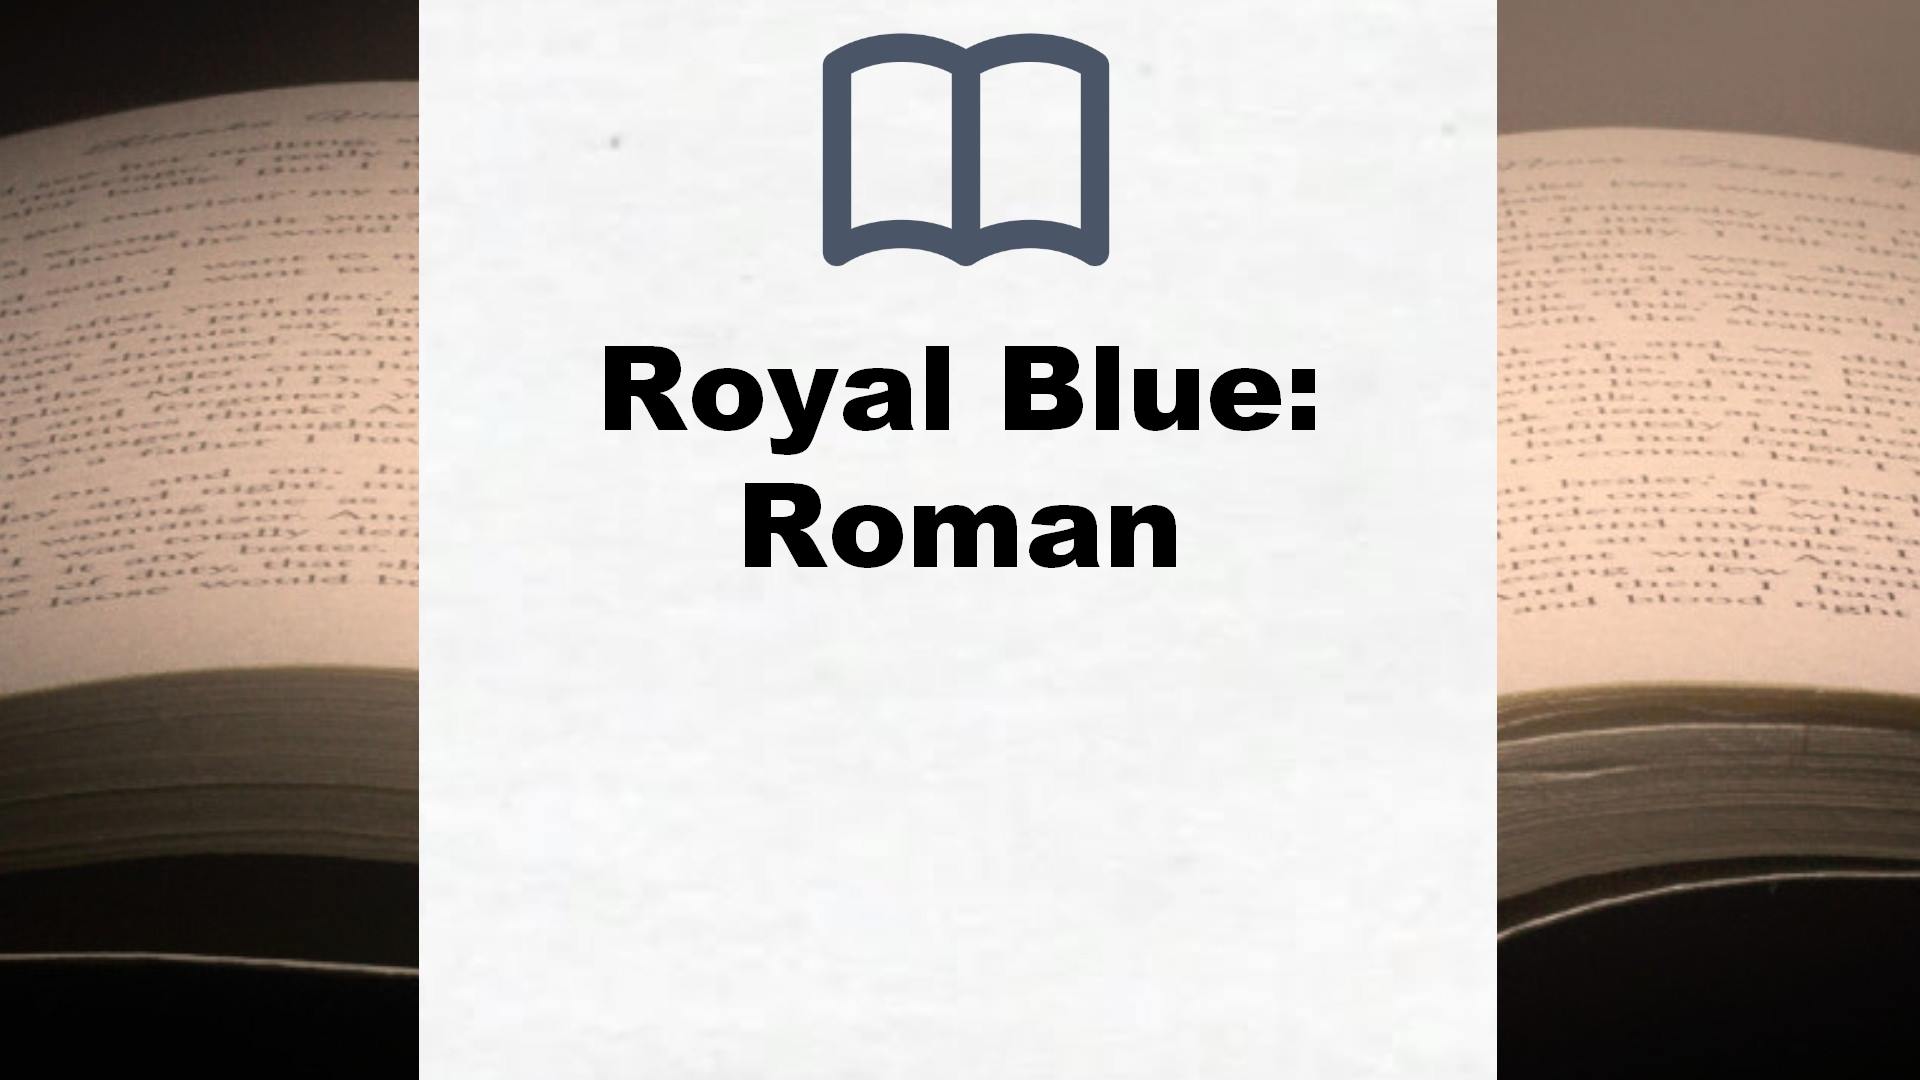 Royal Blue: Roman – Buchrezension